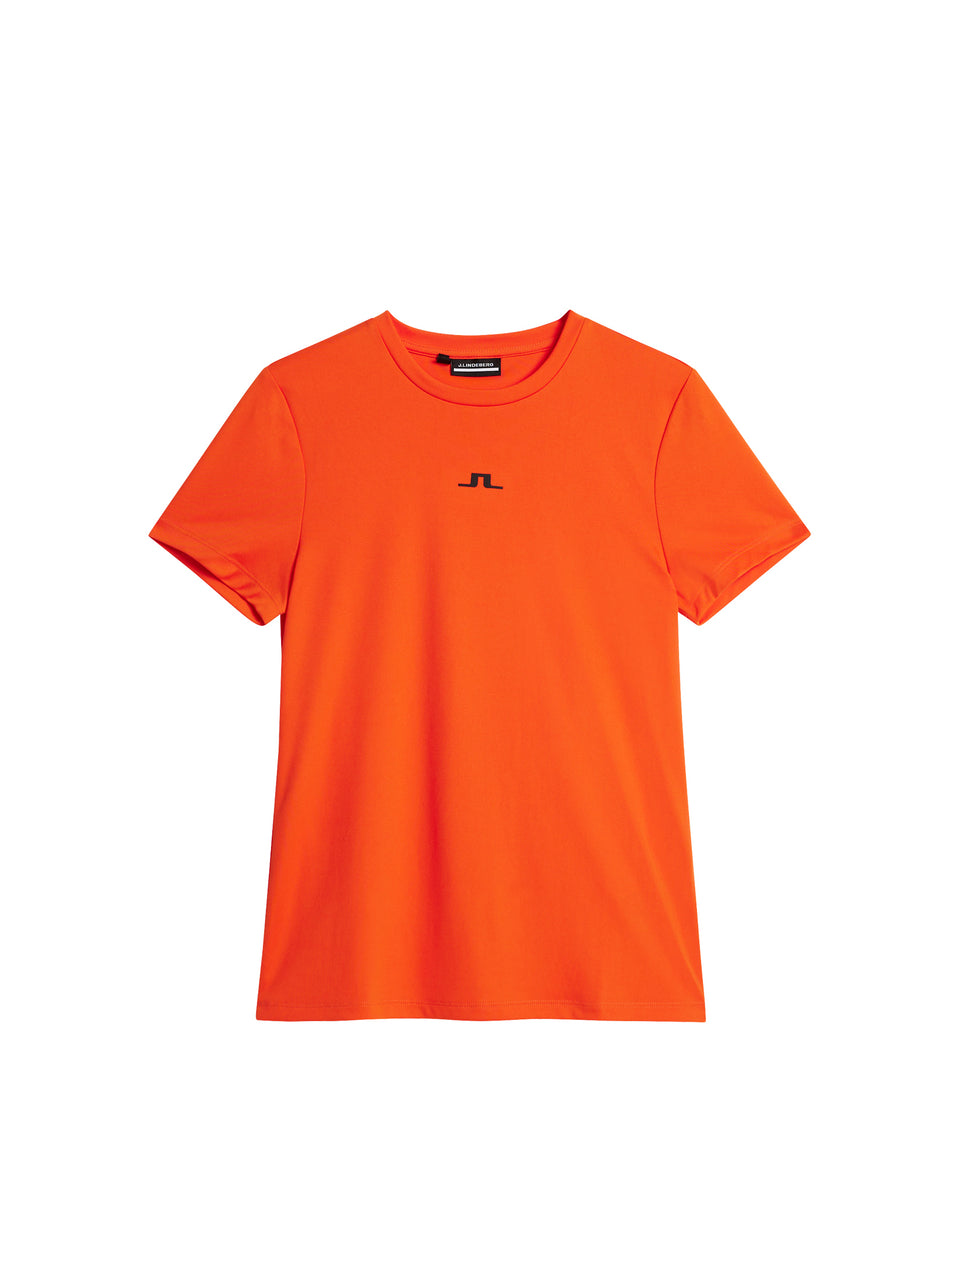 Ada T-shirt / Tangerine Tango